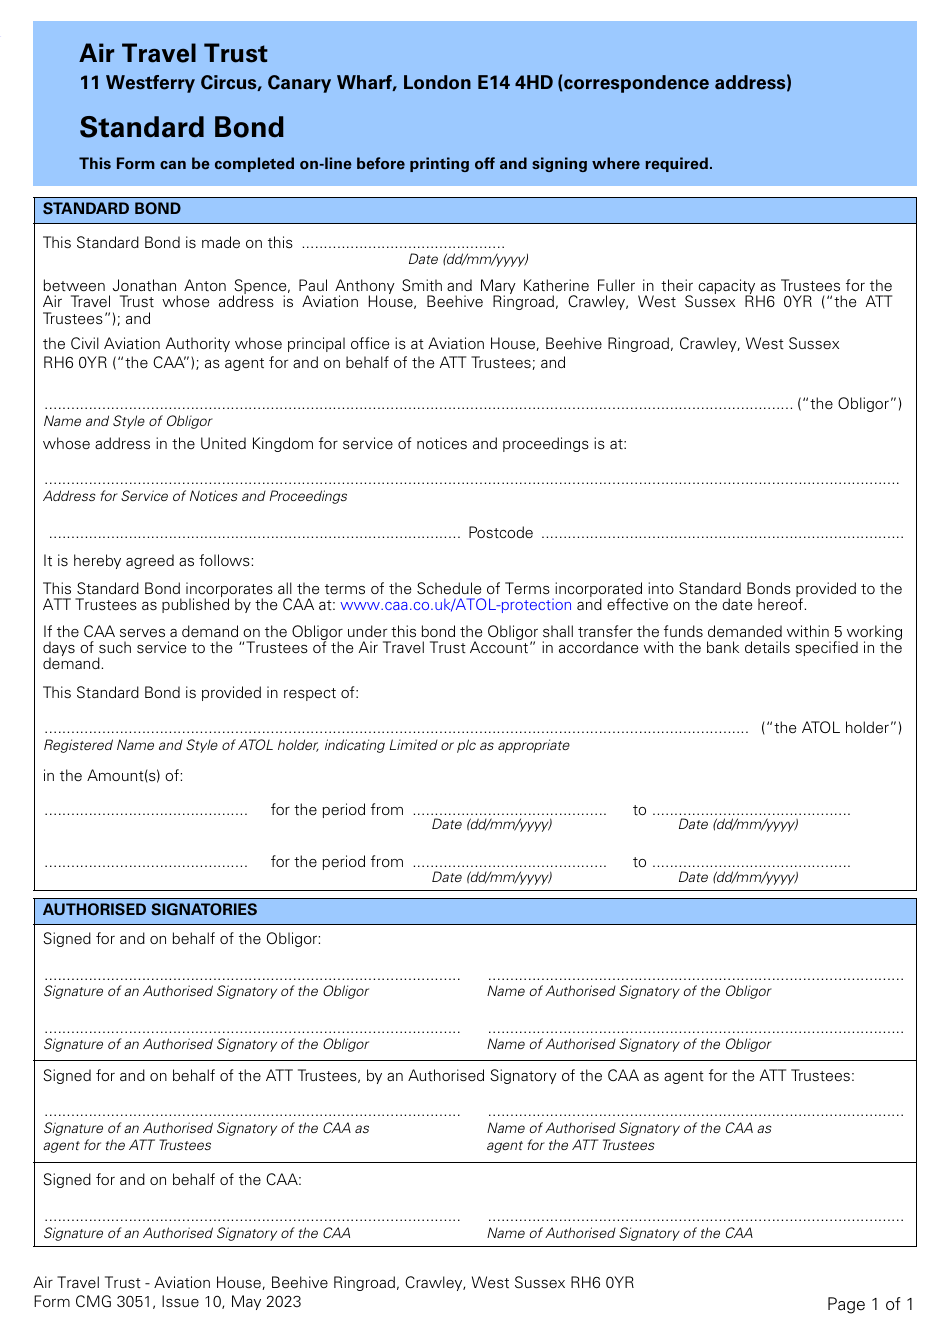 Form CMG3051 Standard Bond - Air Travel Trust - United Kingdom, Page 1